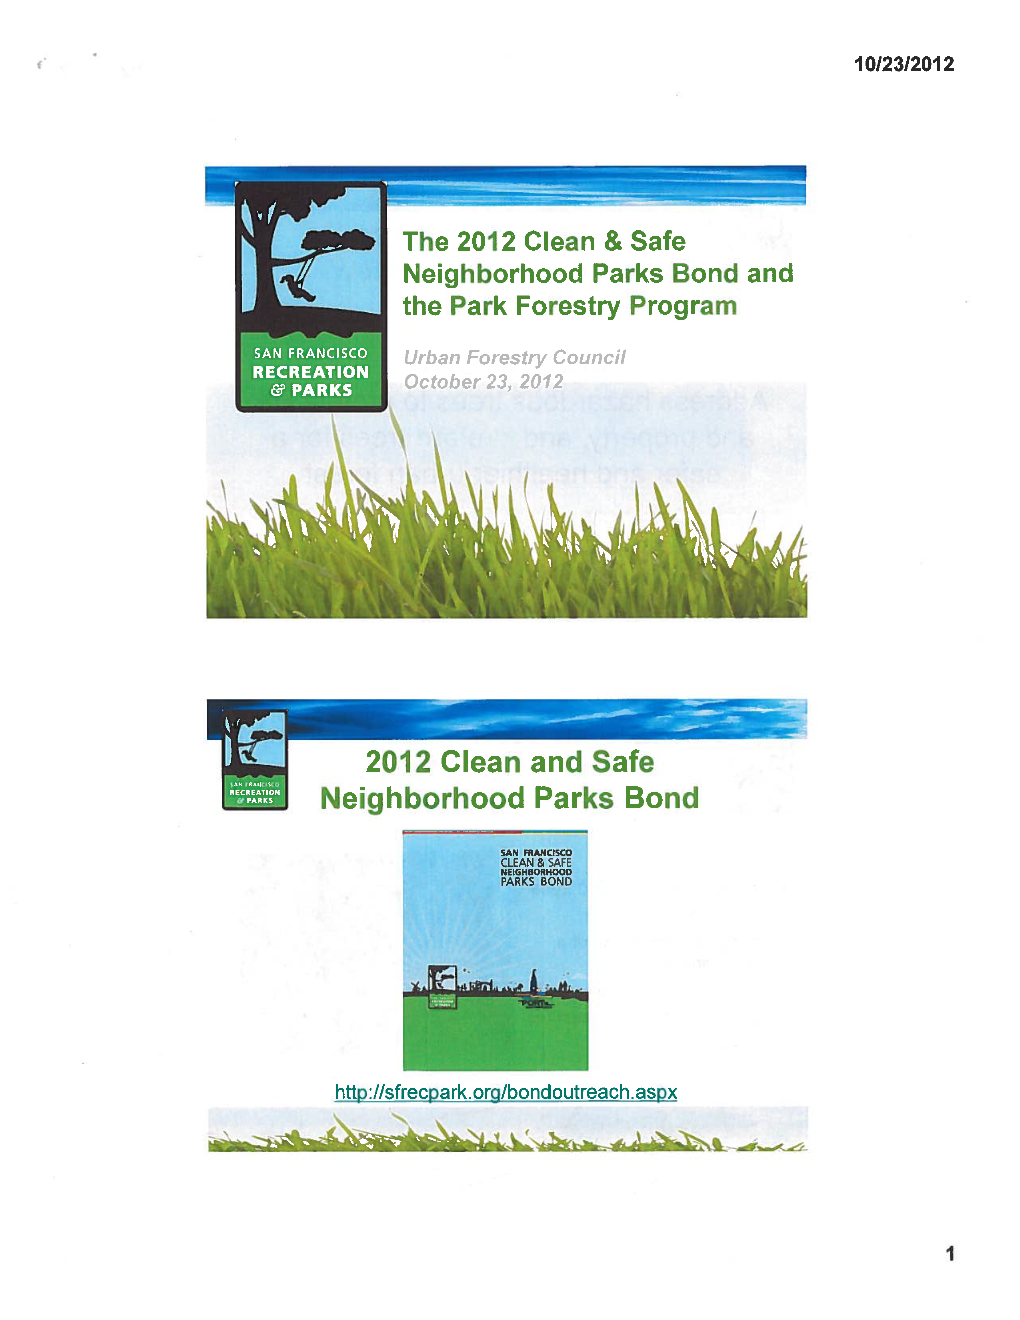 2012 Clean and Safe Neighborhood Parks Bond